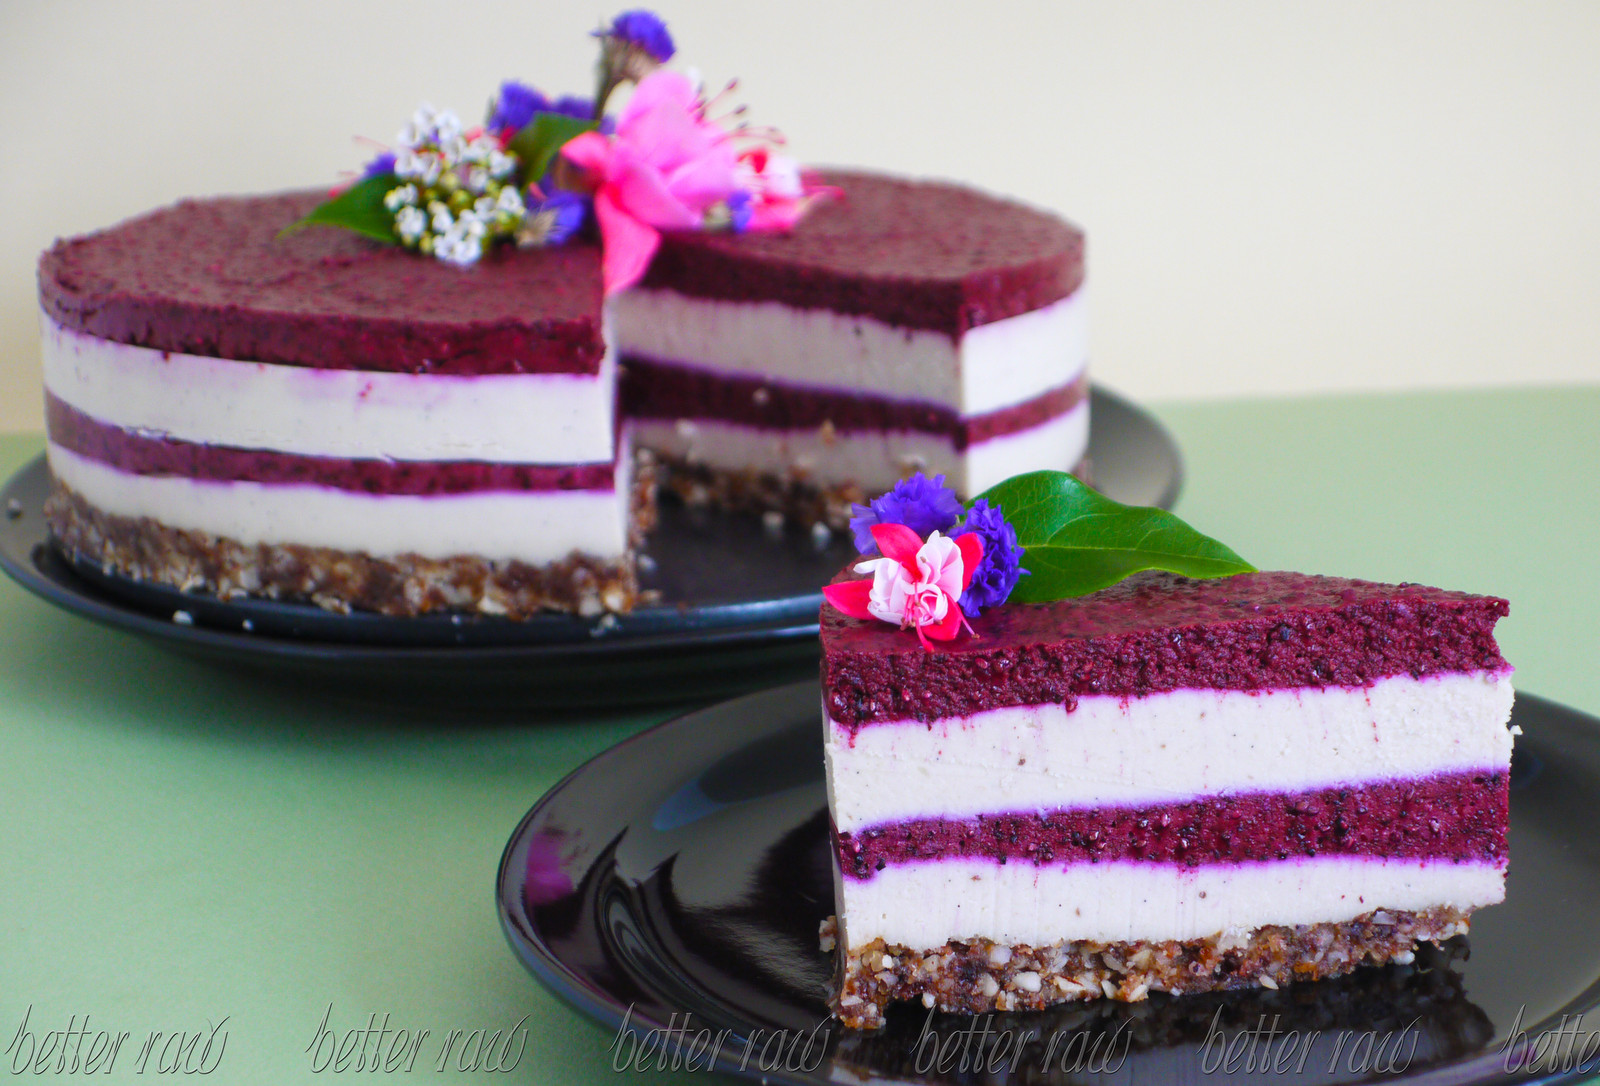 Blueberry Birthday Cake Recipes
 BLUEBERRY AND CREAM LAYER BIRTHDAY CAKE Better Raw